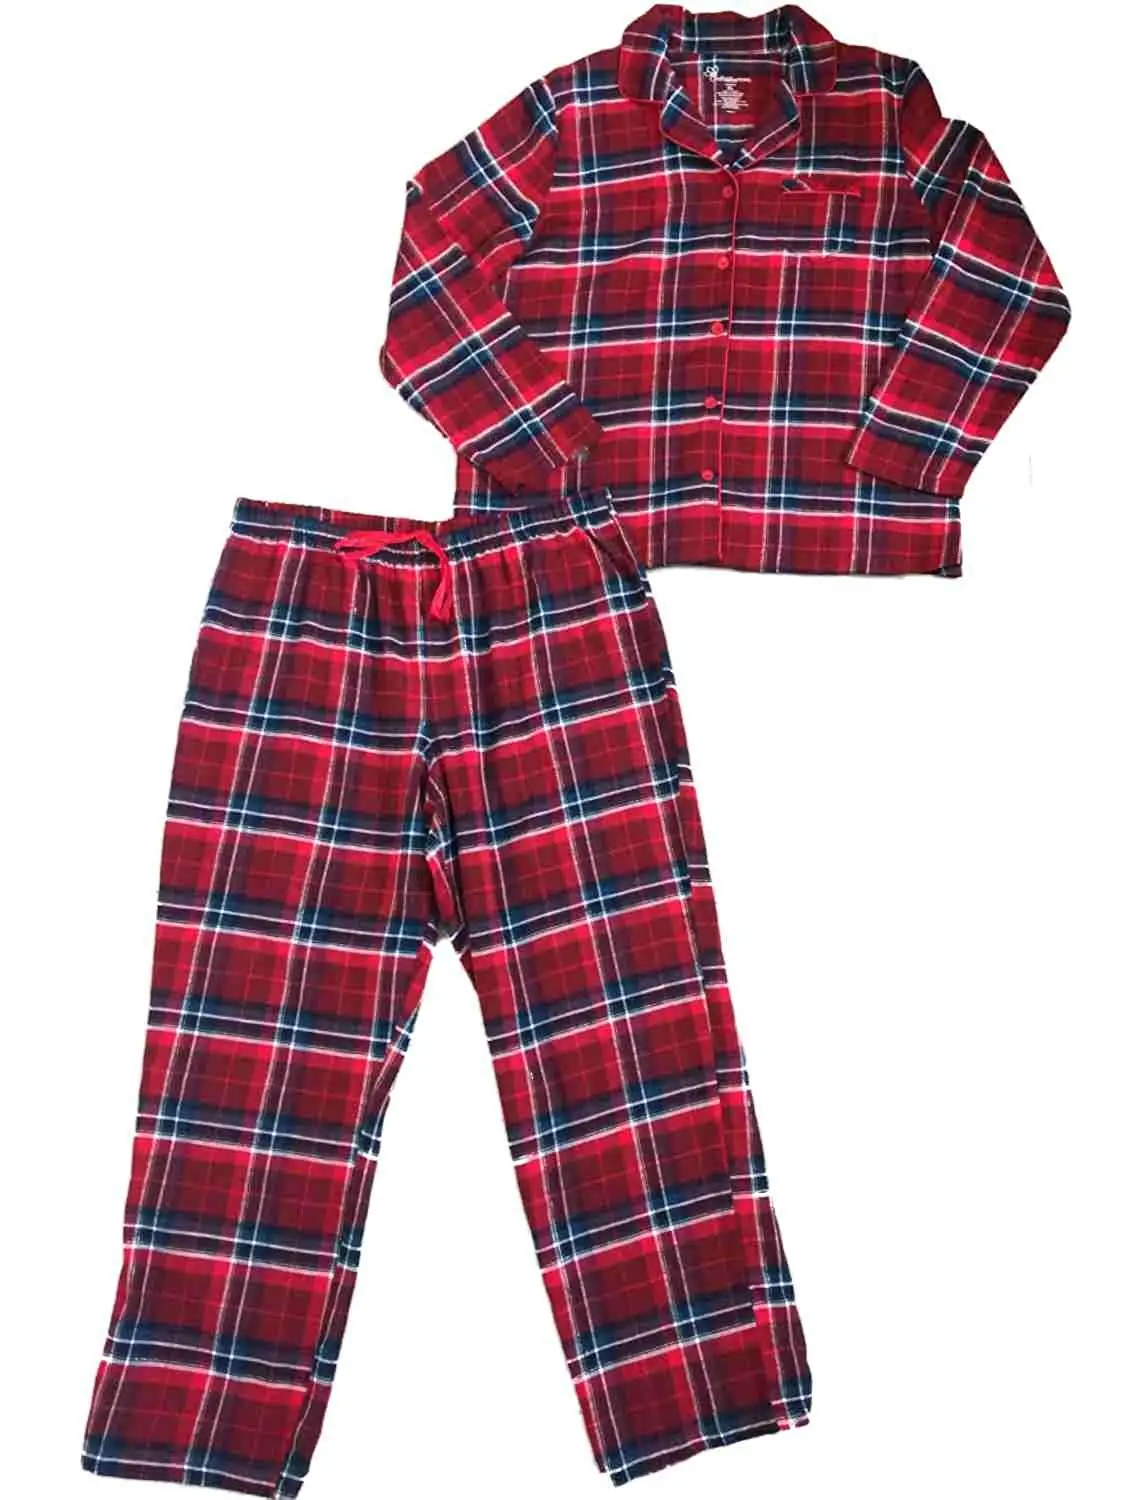 Cheap Checkered Pajamas, find Checkered Pajamas deals on line at ...